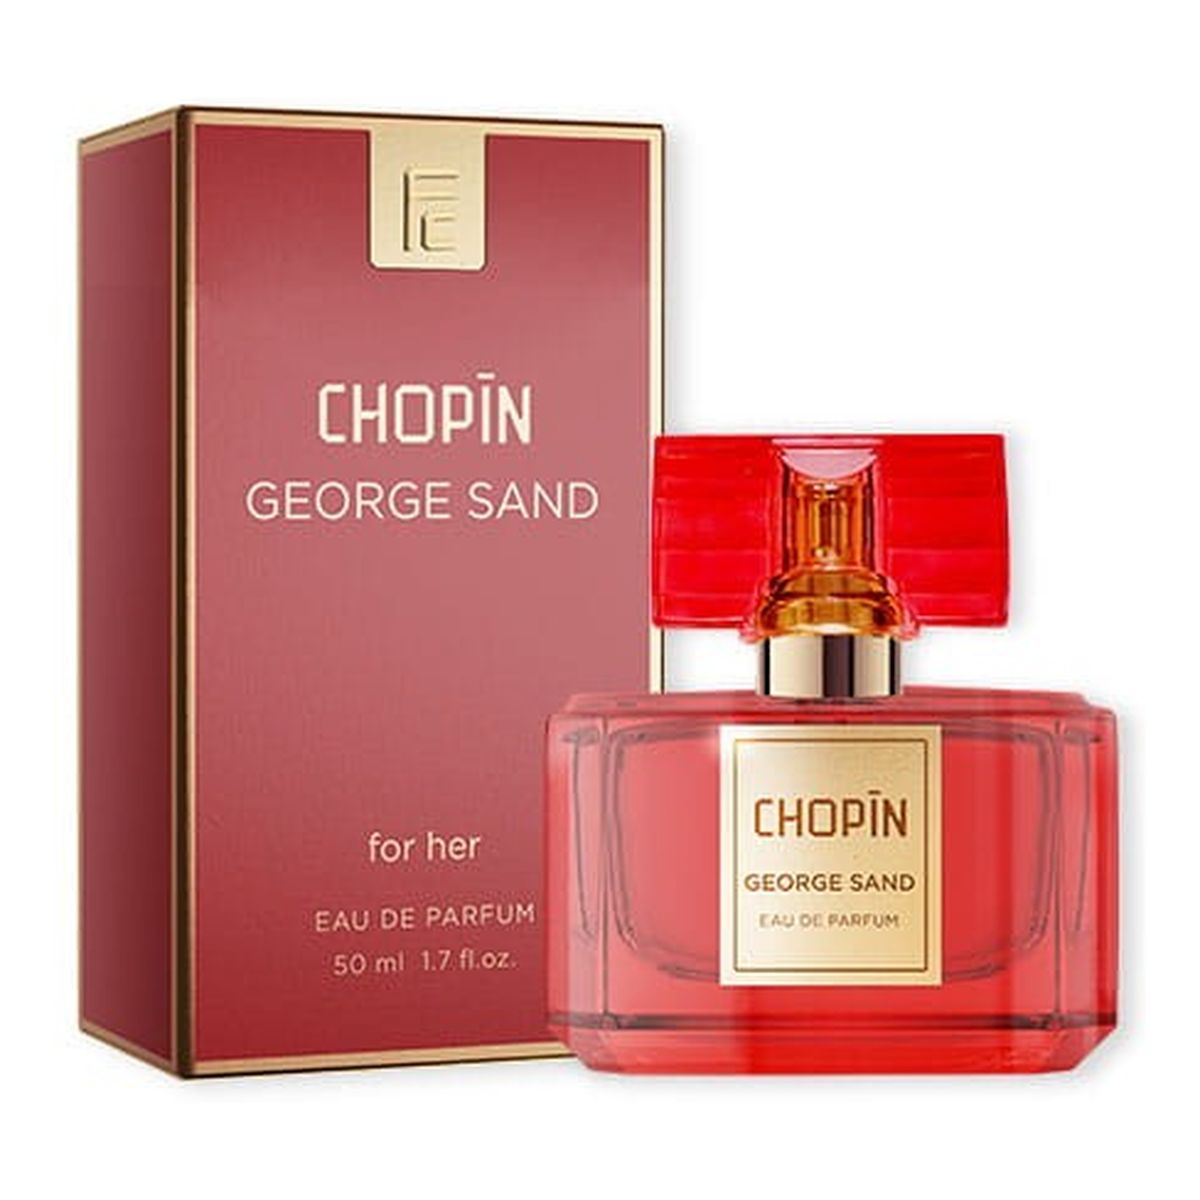 Miraculum Chopin george sand eau de parfum woman 50 ml 50ml